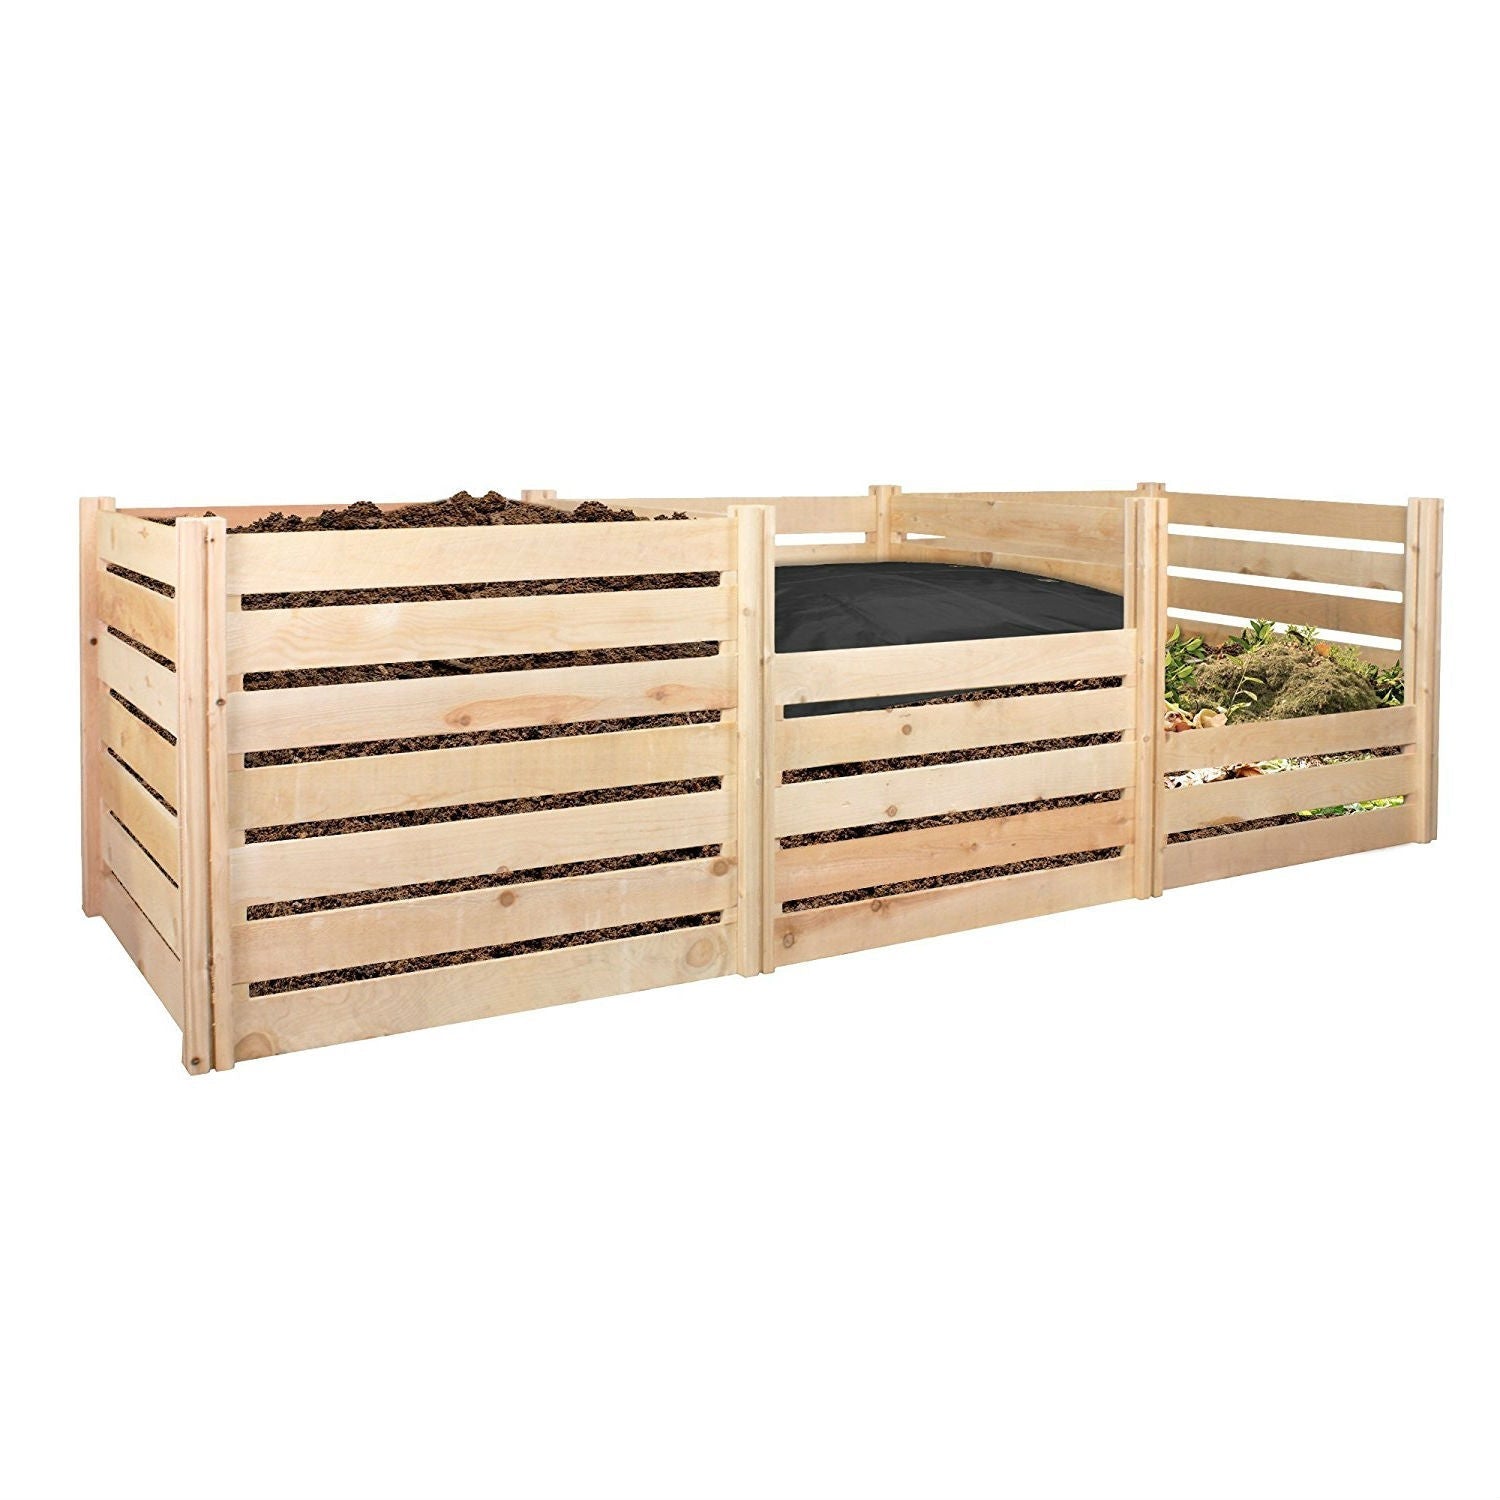 Outdoor > Gardening > Compost Bins - Outdoor 174-Gallon Wooden Compost Bin Made From Eco-Friendly Cedar Wood